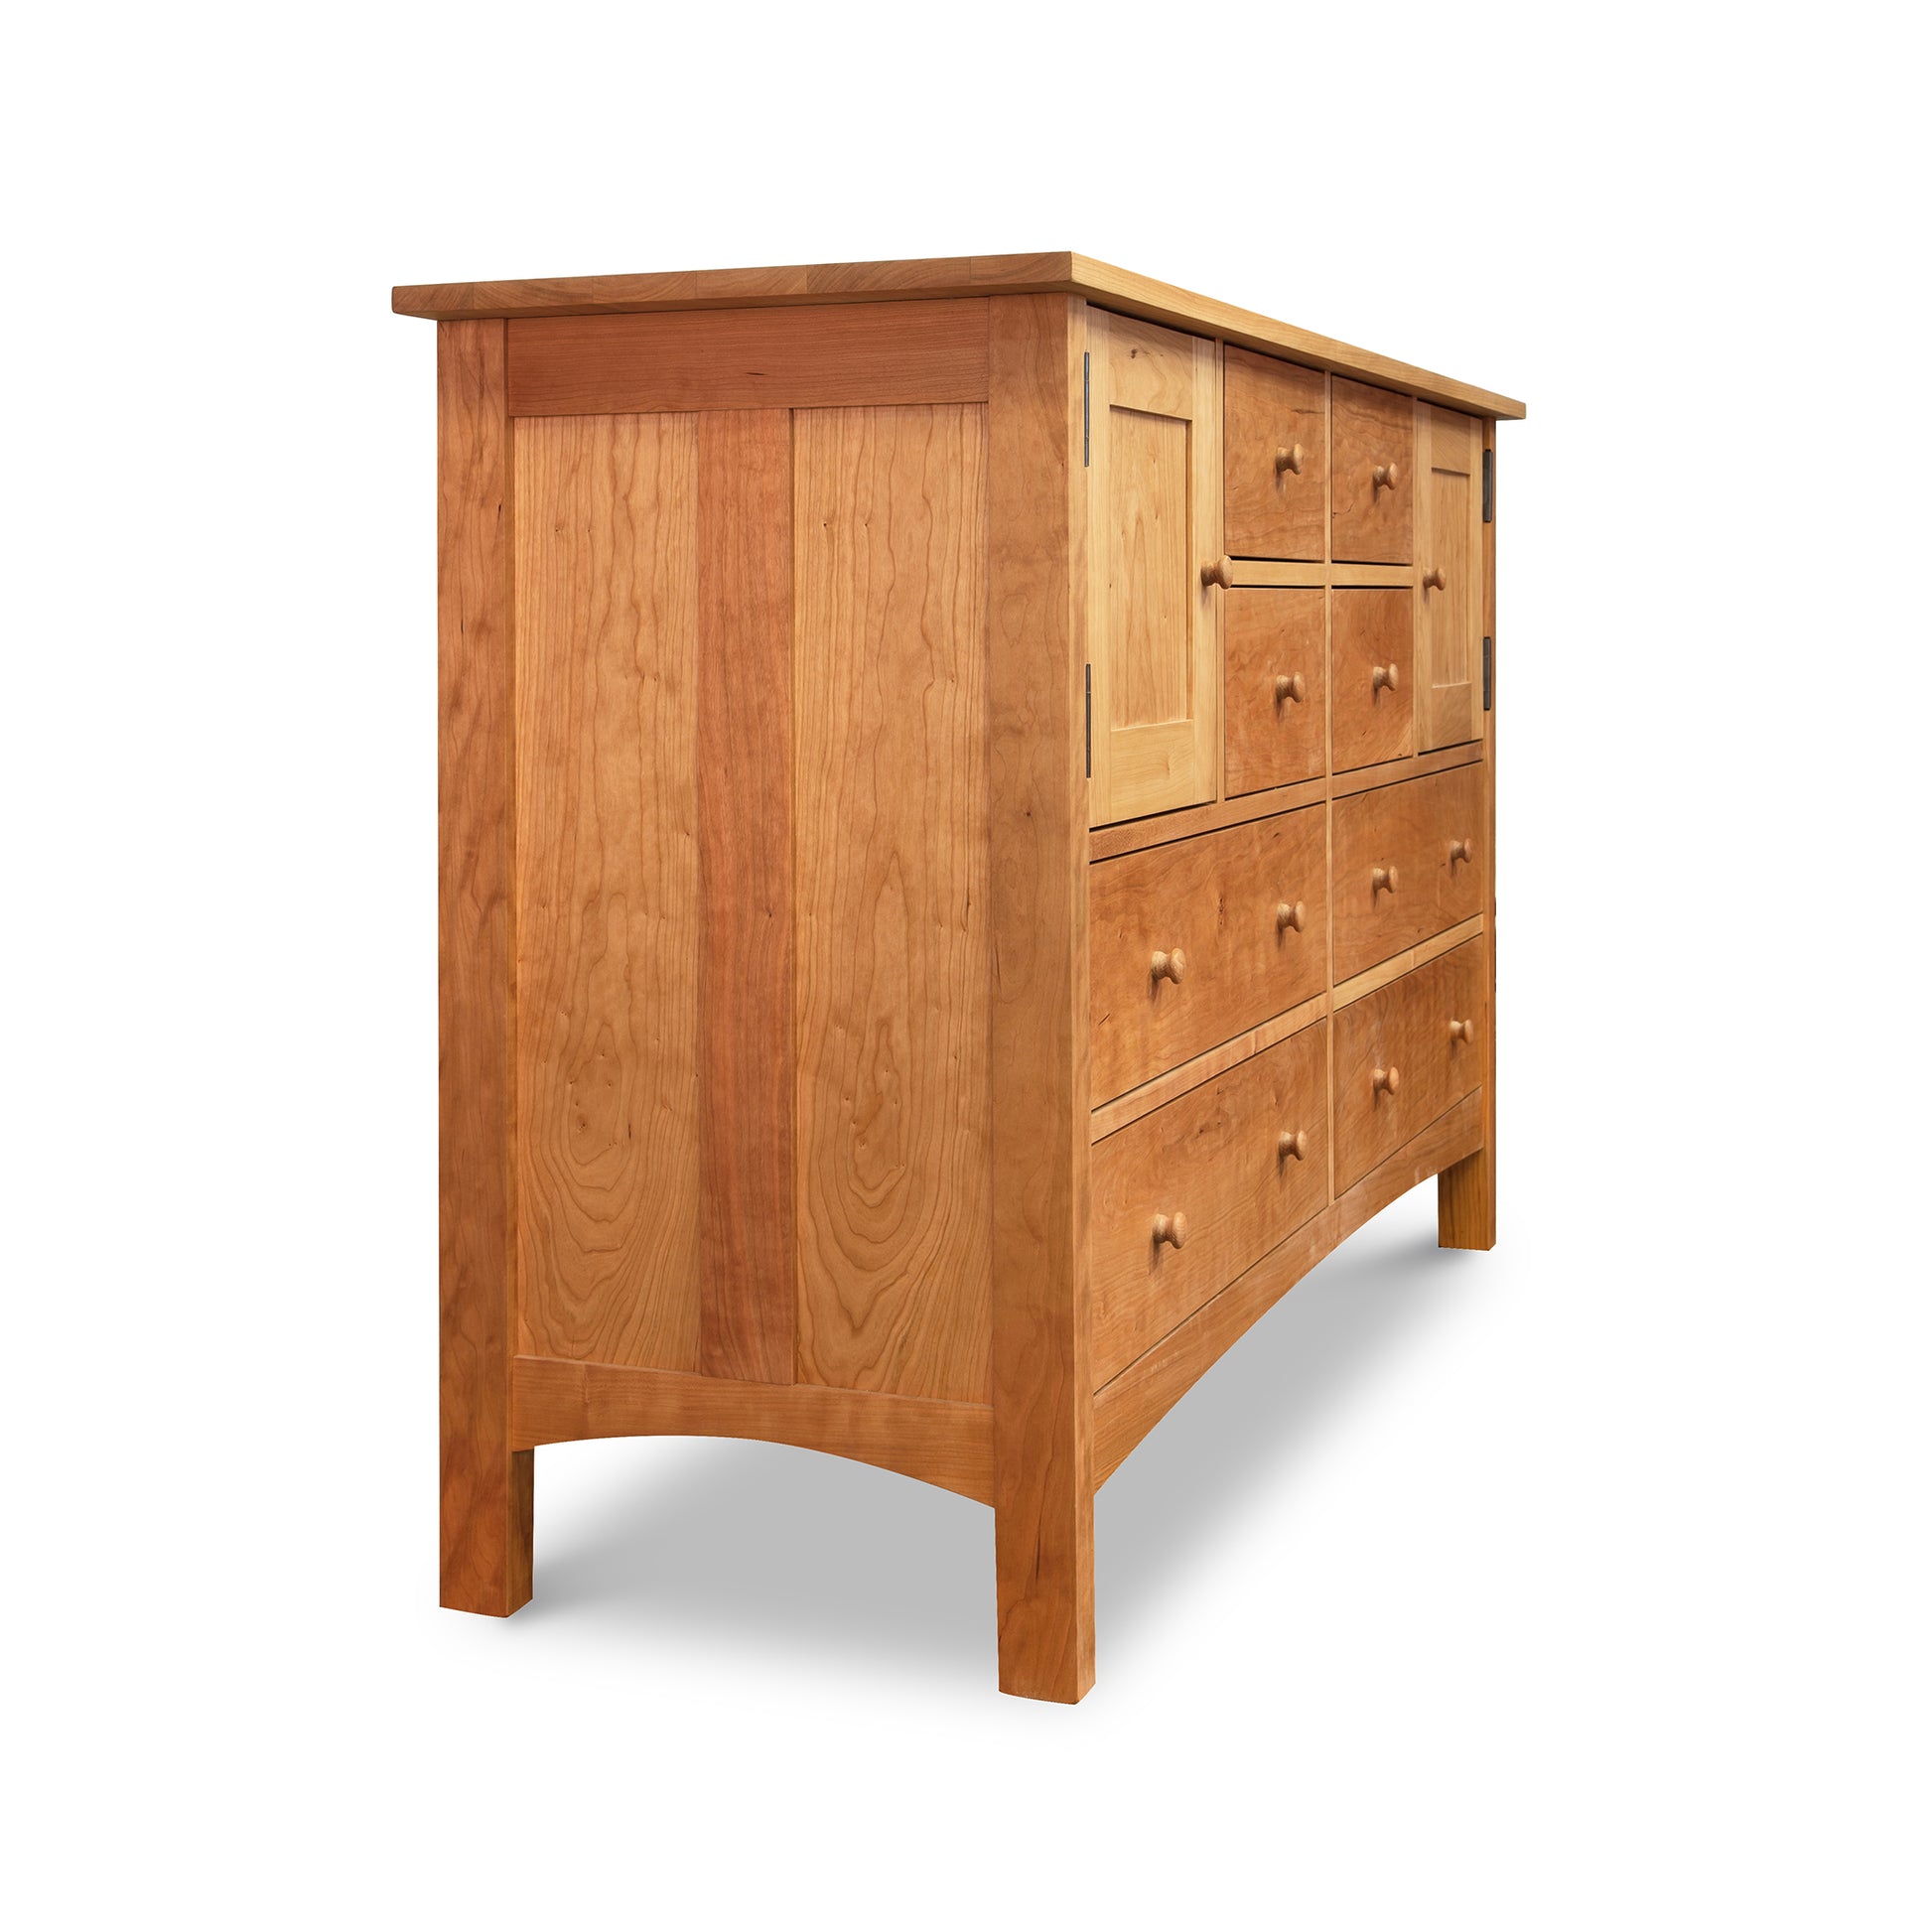 A luxury Vermont Furniture Designs Burlington Shaker 8-Drawer 2-Door Dresser with wooden drawers.